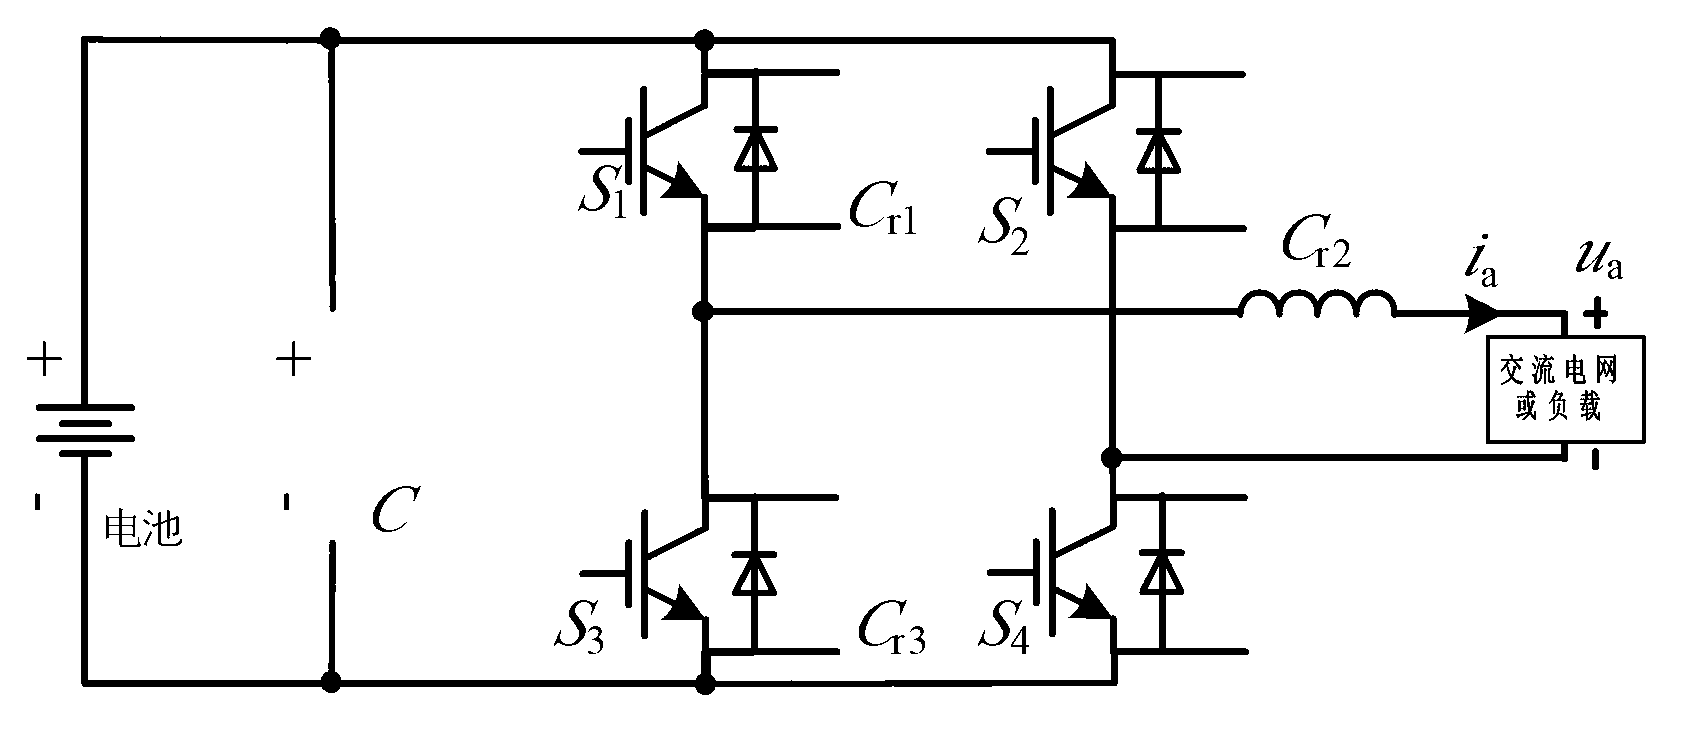 Low-additional-voltage zero-voltage switch energy storage bridge type inverter and modulation method